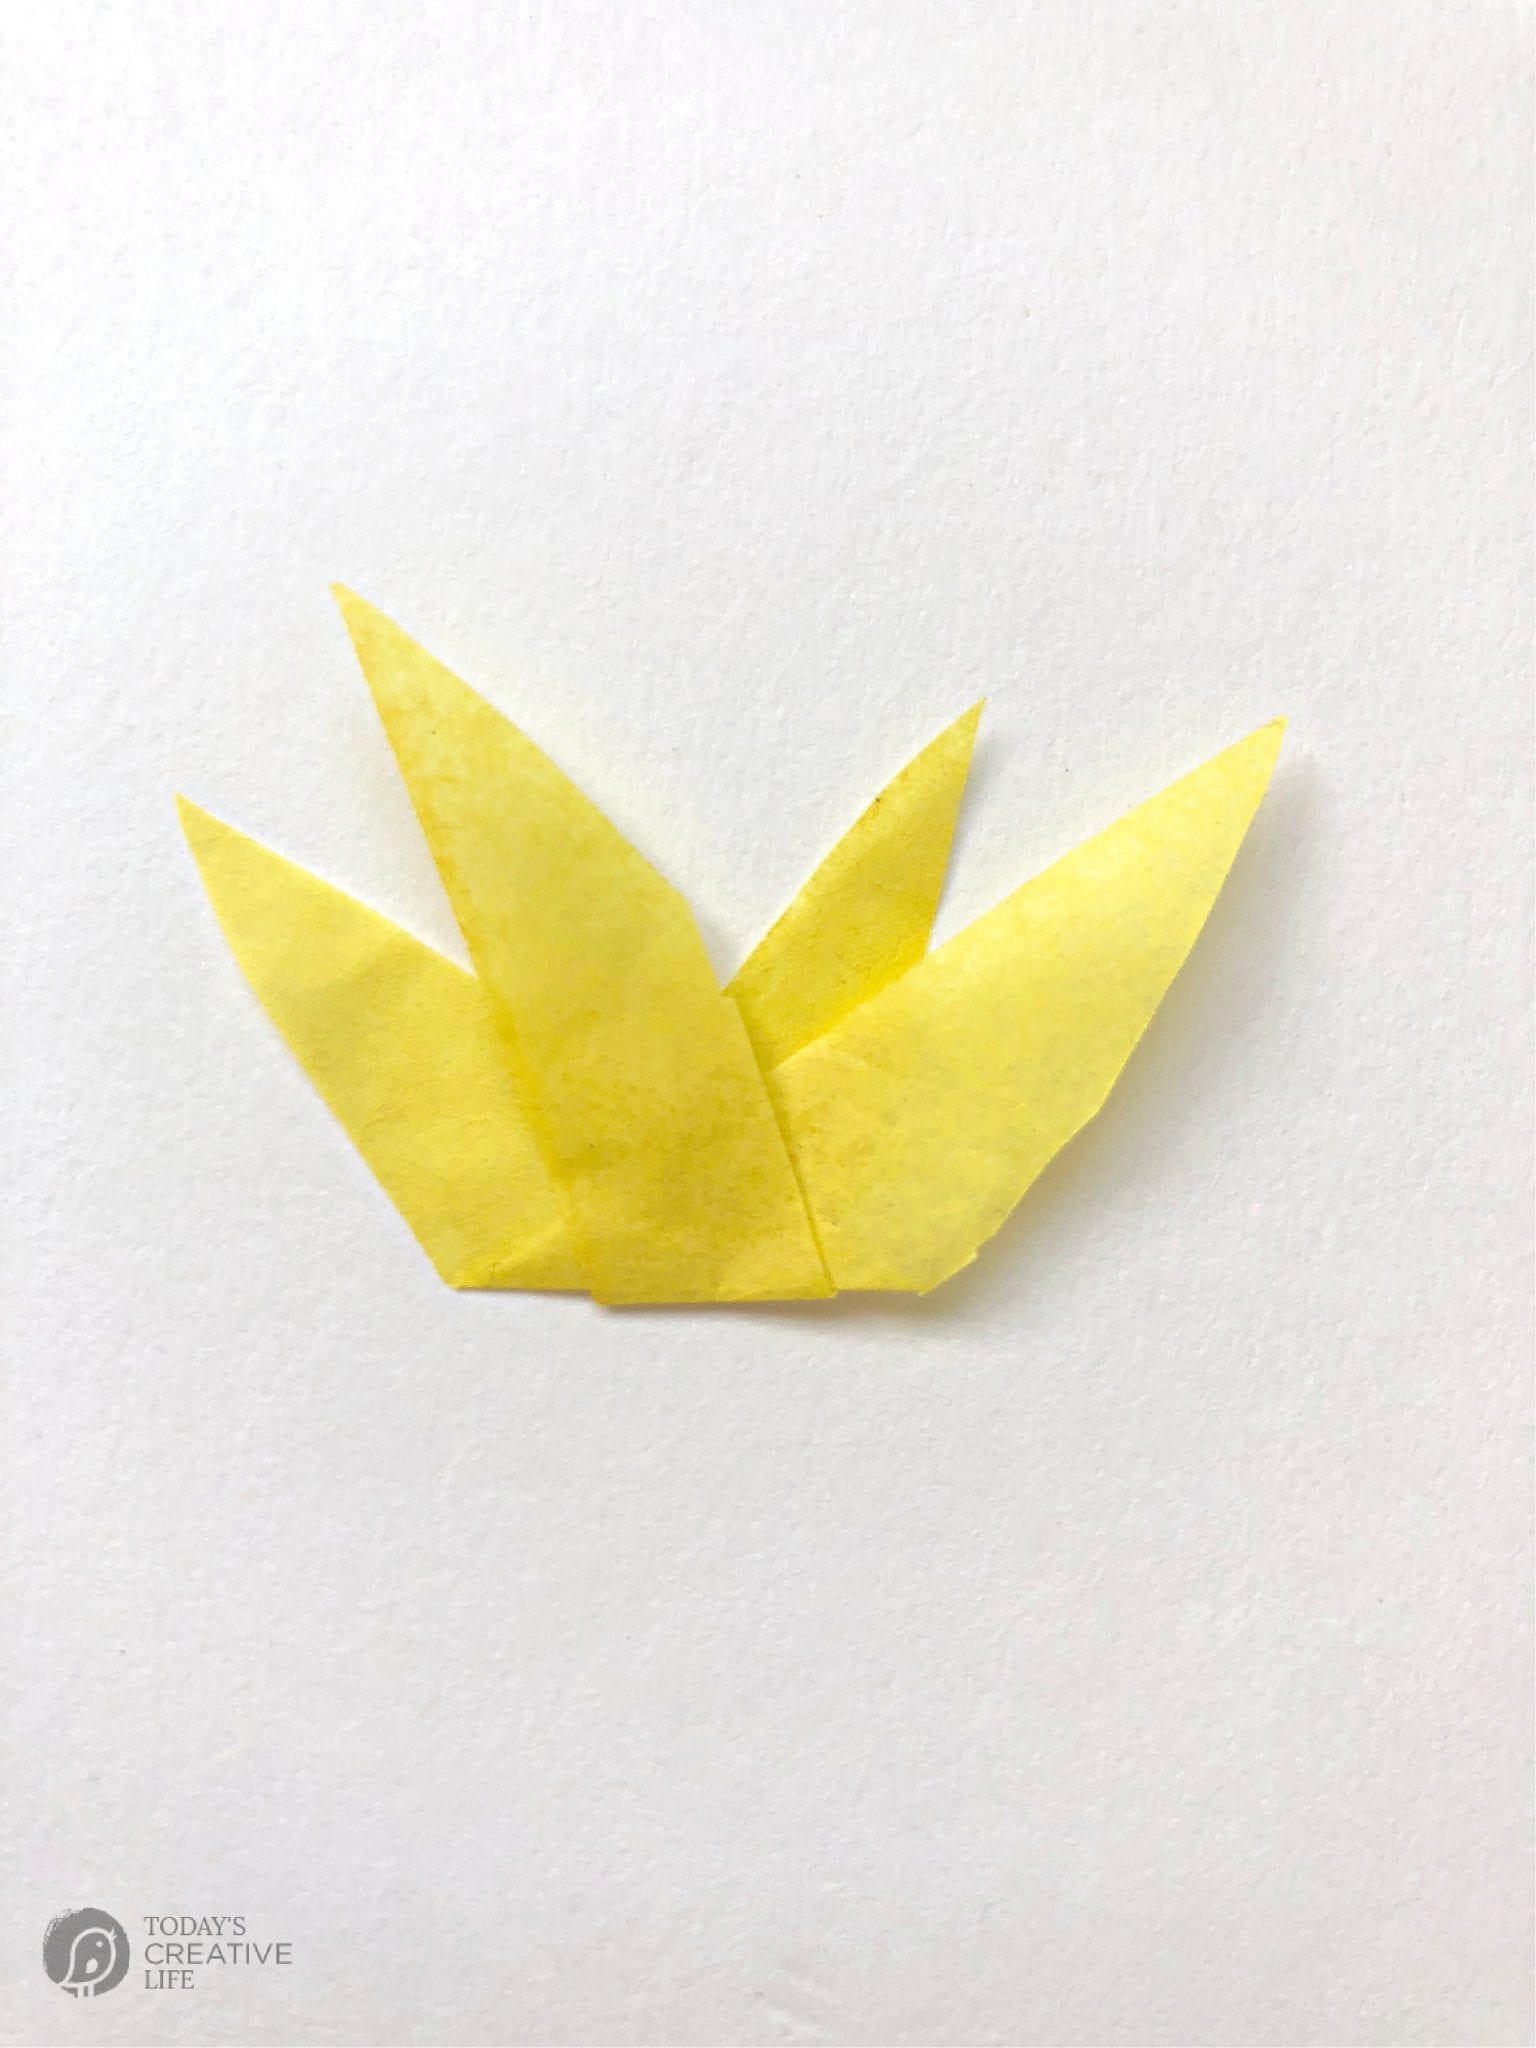 Folded Tissue Paper for making a DIY Tissue Paper Flower